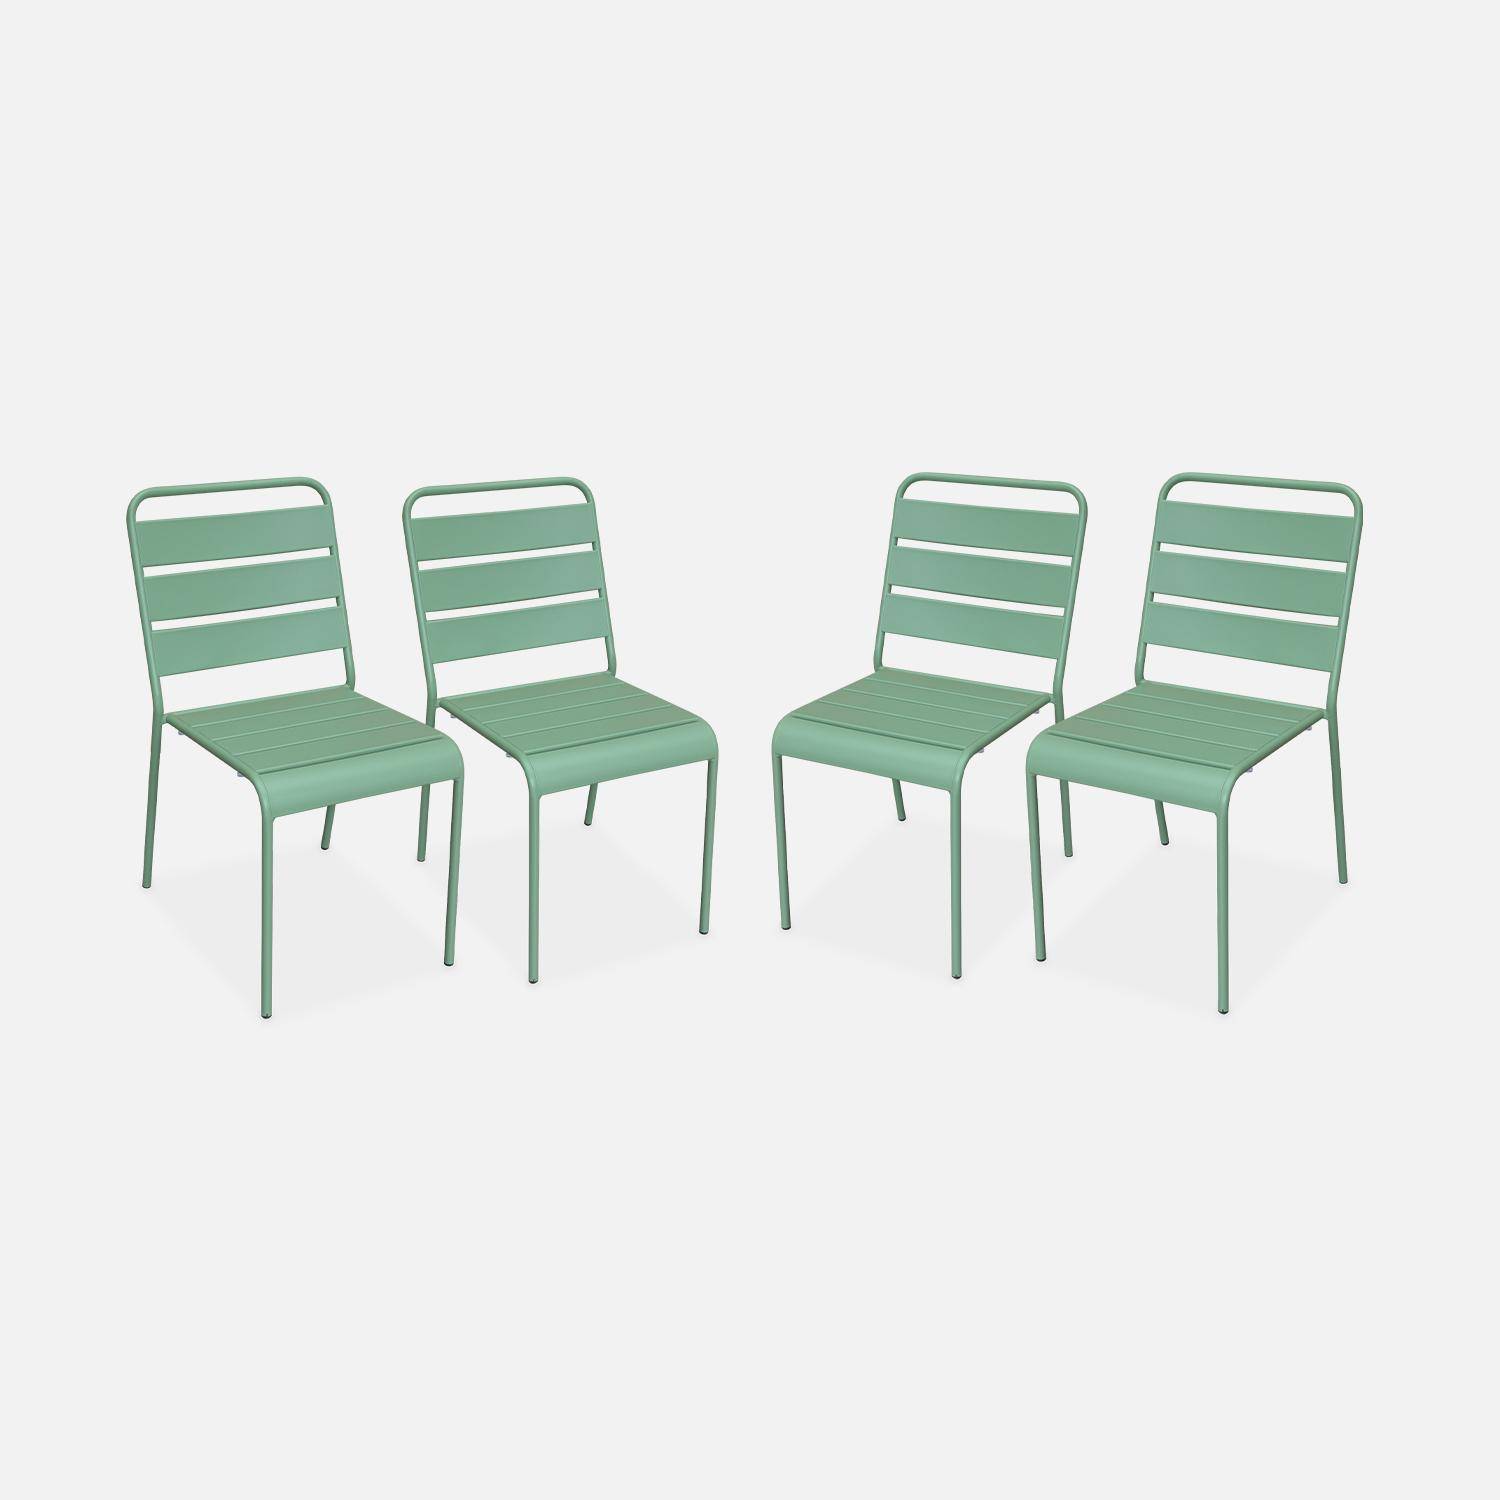 Table de jardin en métal 160x90cm + 4 chaises empilables et 2 fauteuils vert jade,sweeek,Photo3